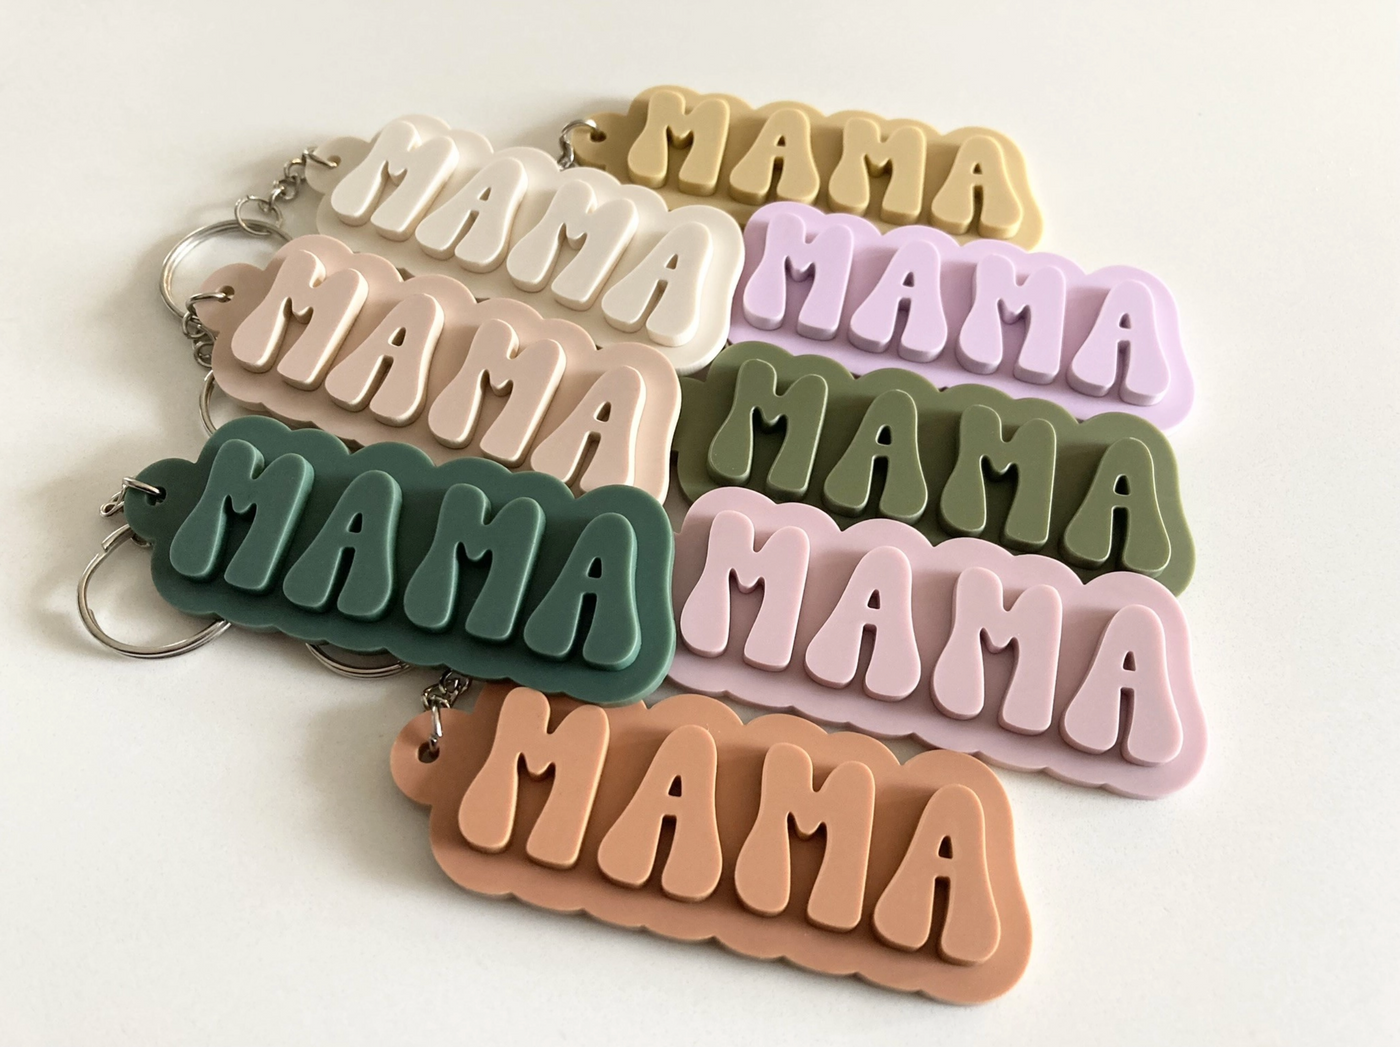 Mama Acrylic Keychain